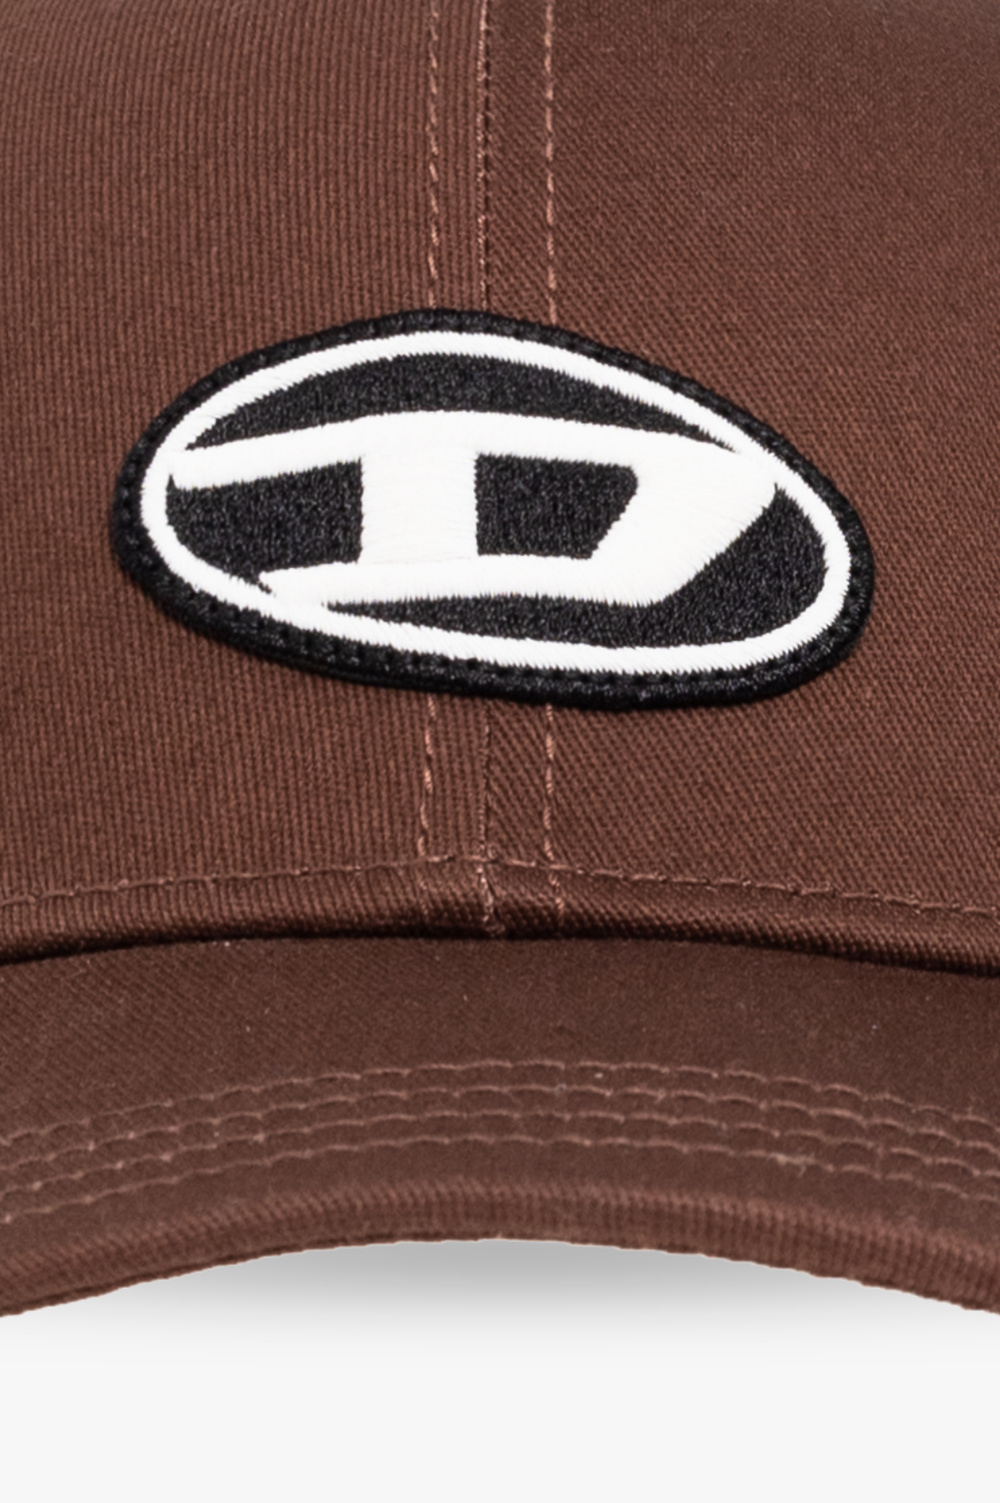 Diesel ‘C-RUNE’ baseball cap